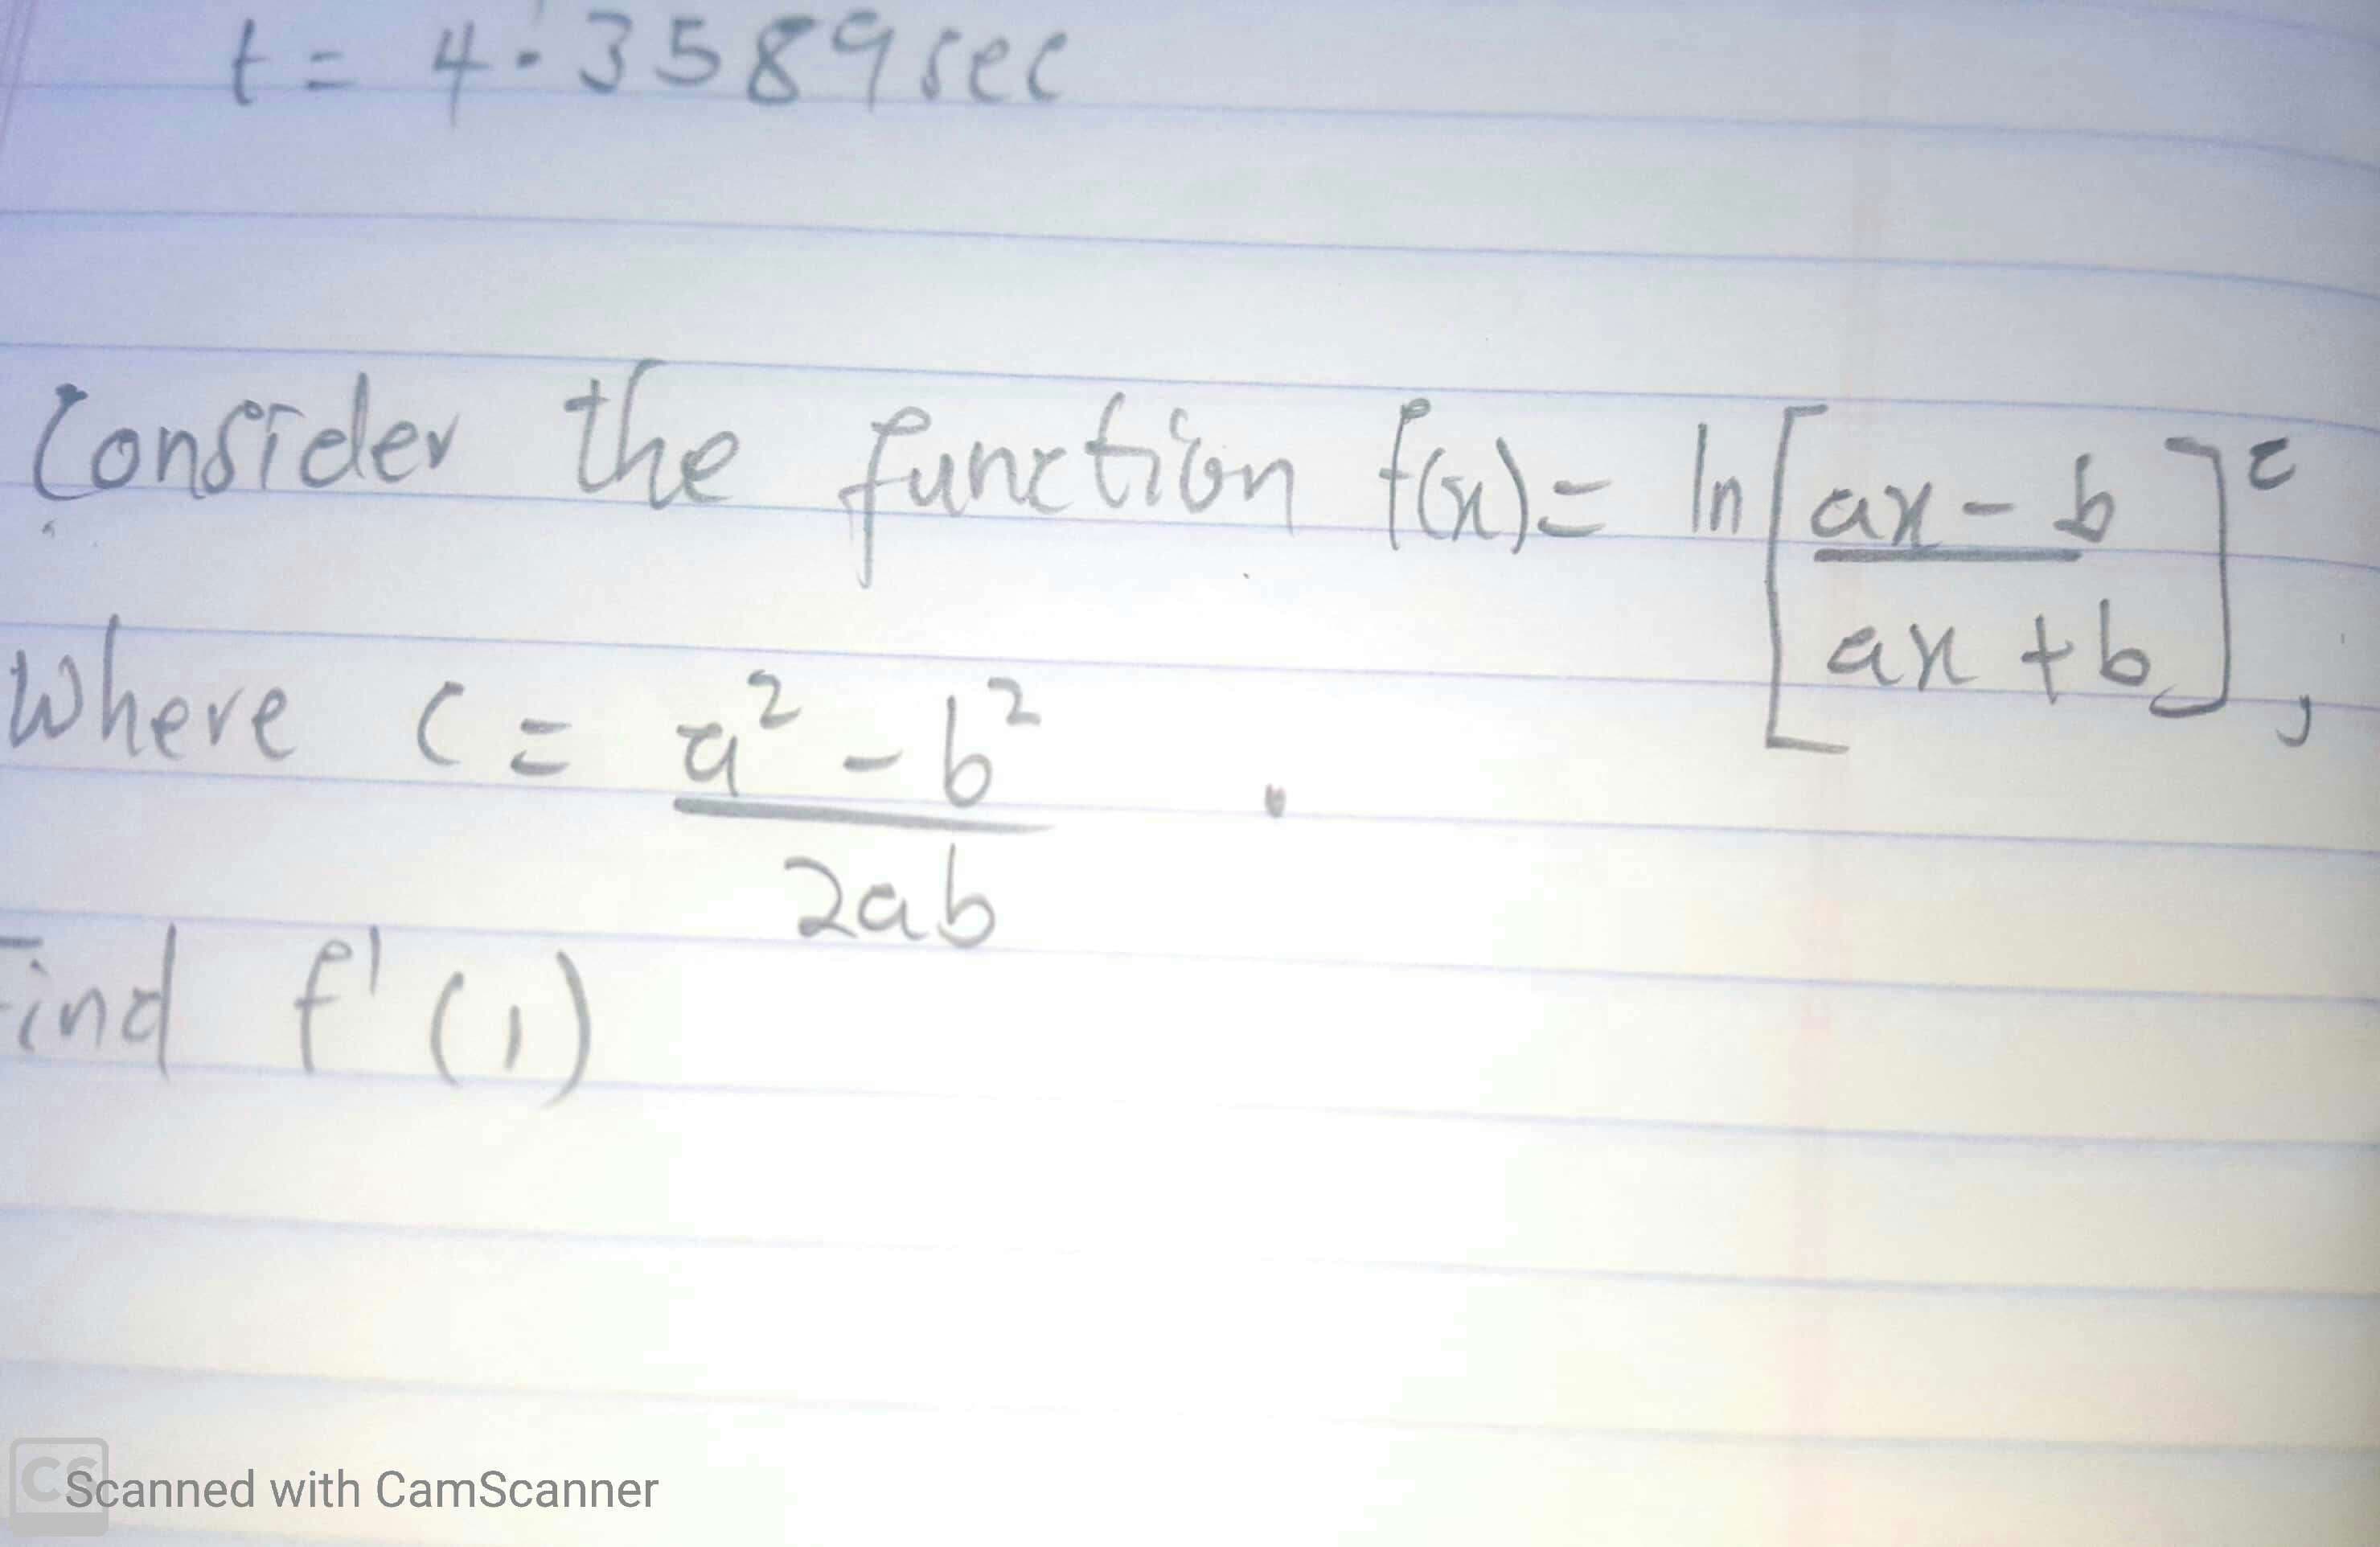 Consider the fune tion fa)- In[ax- b
an tb]
where c= ? -6
bi
2ab
ind f' ()
